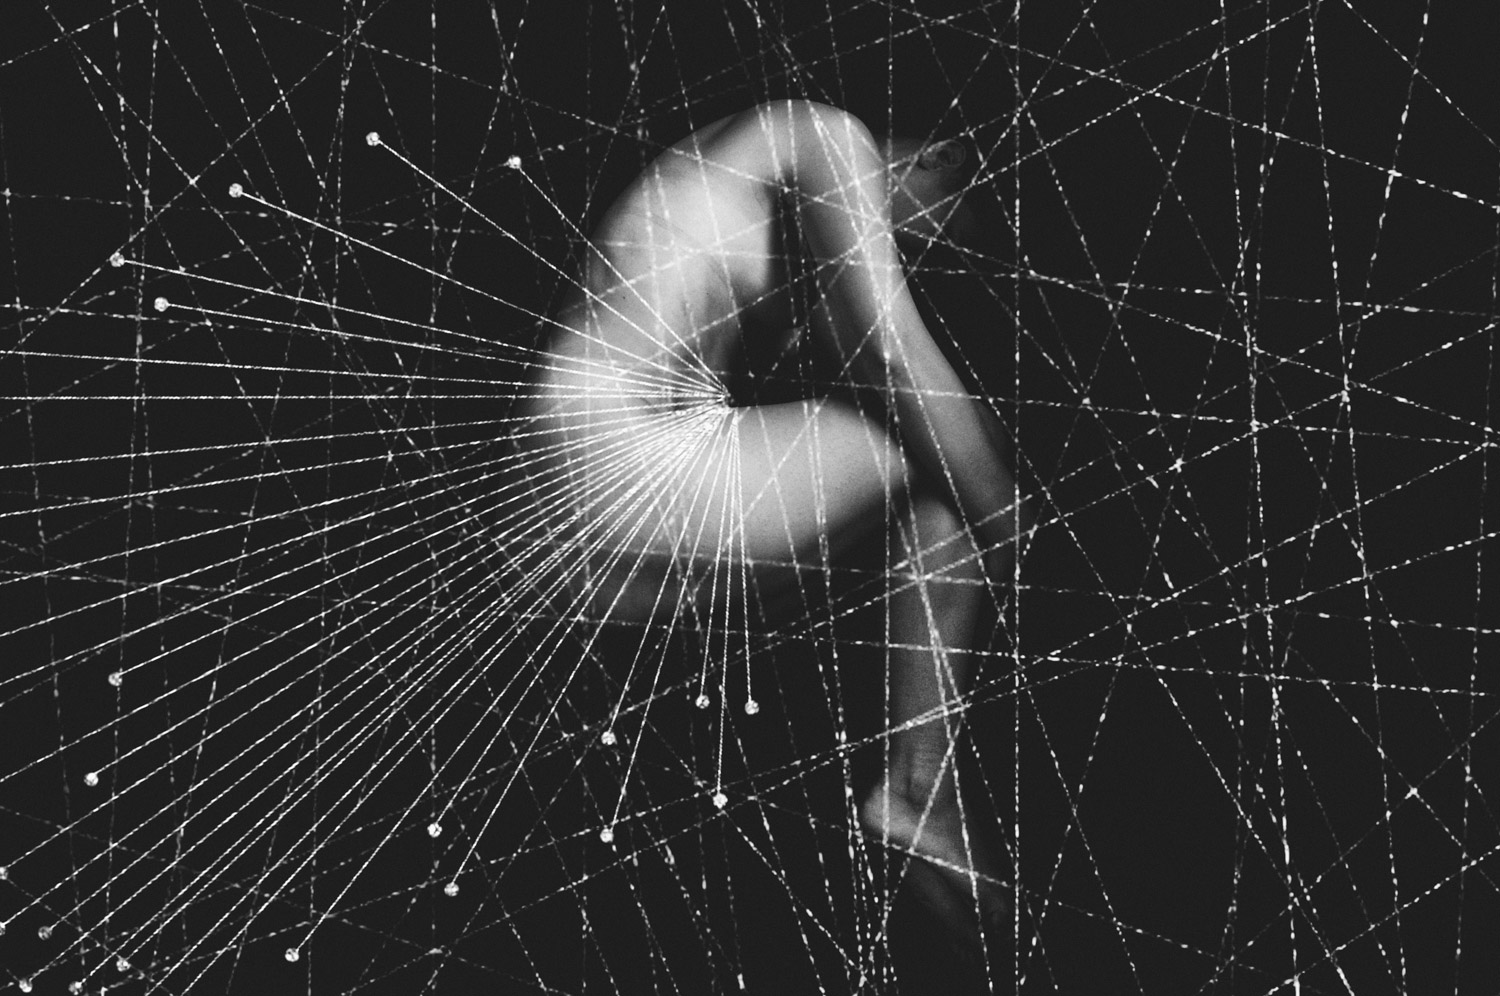 Nadia Maria - nude body amid constellation-like lines